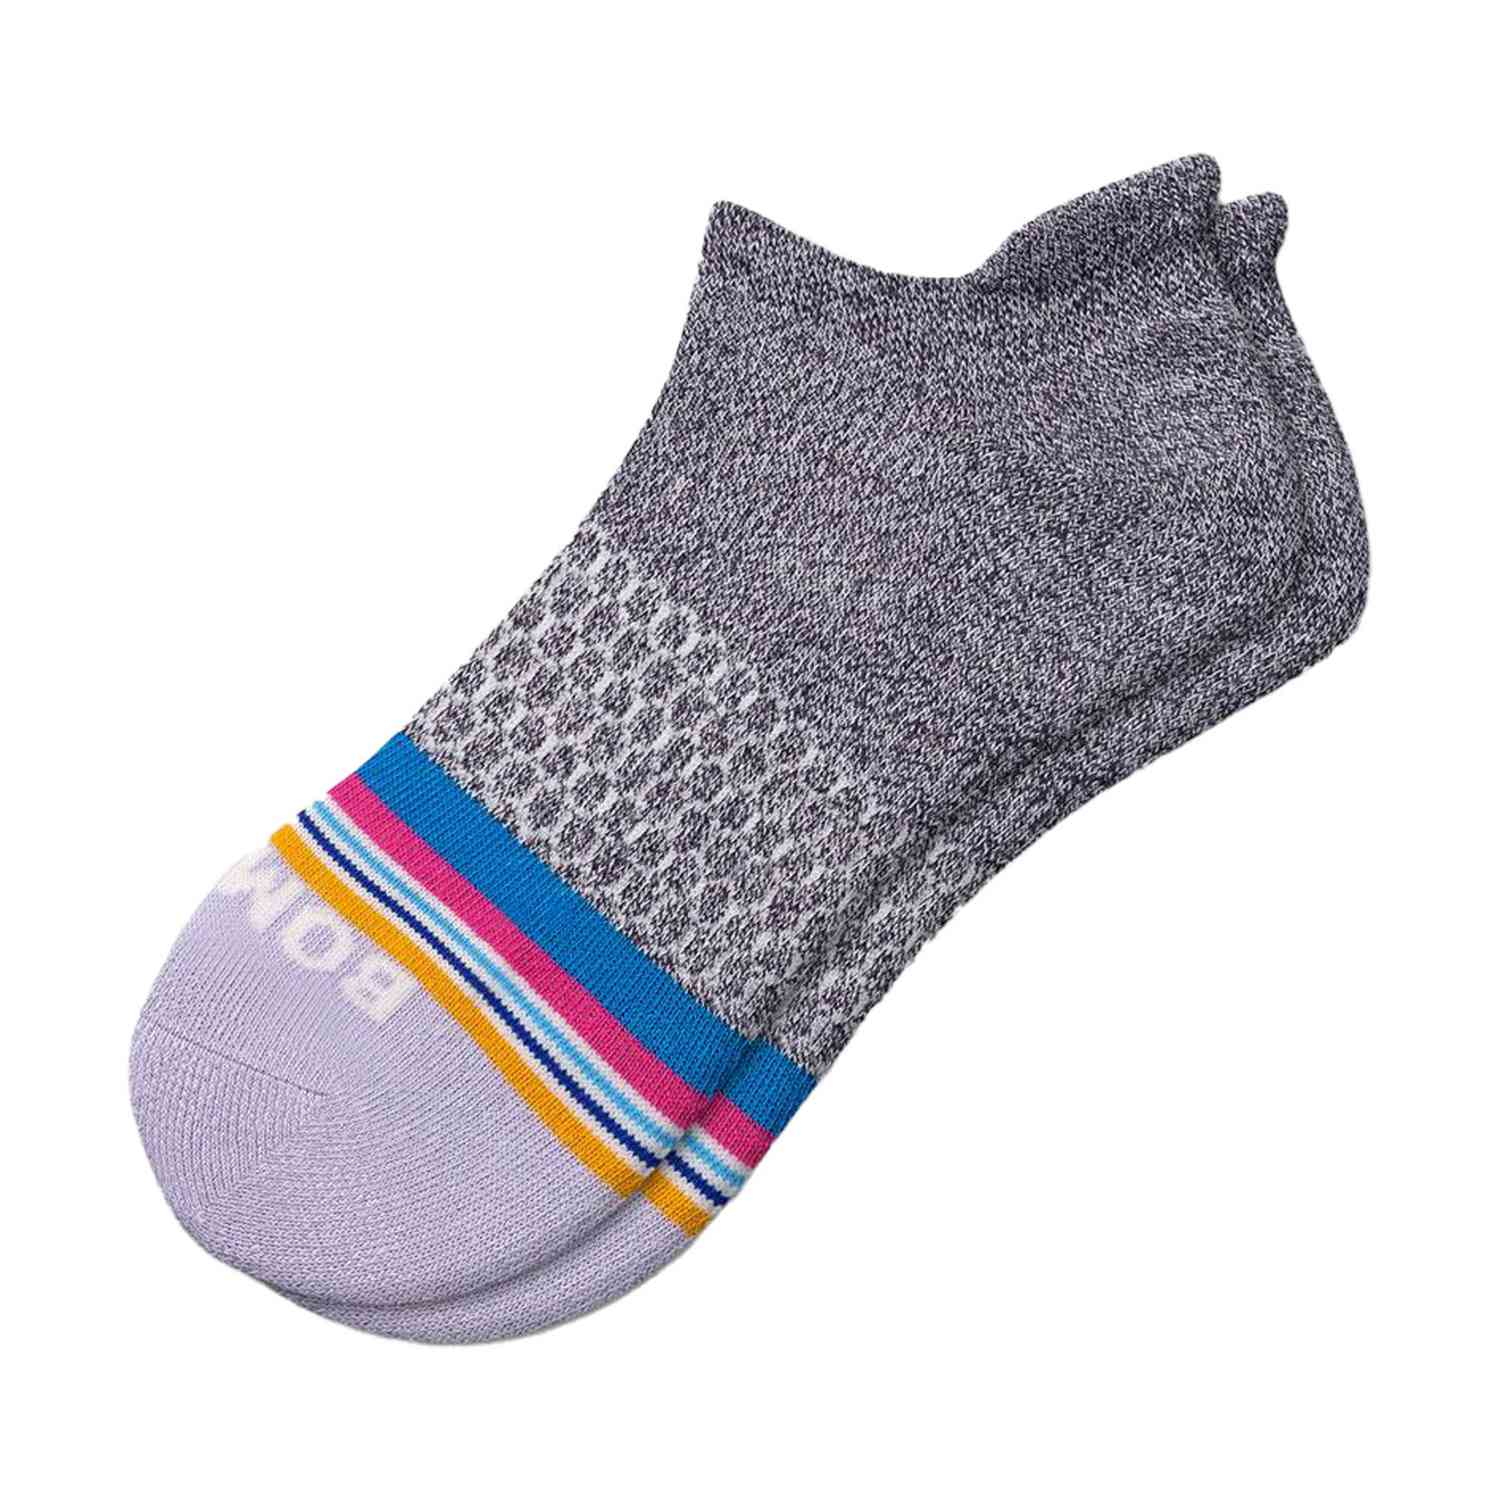 Bad Brew Rhino Socks SS anklet sports socks XL sand/white